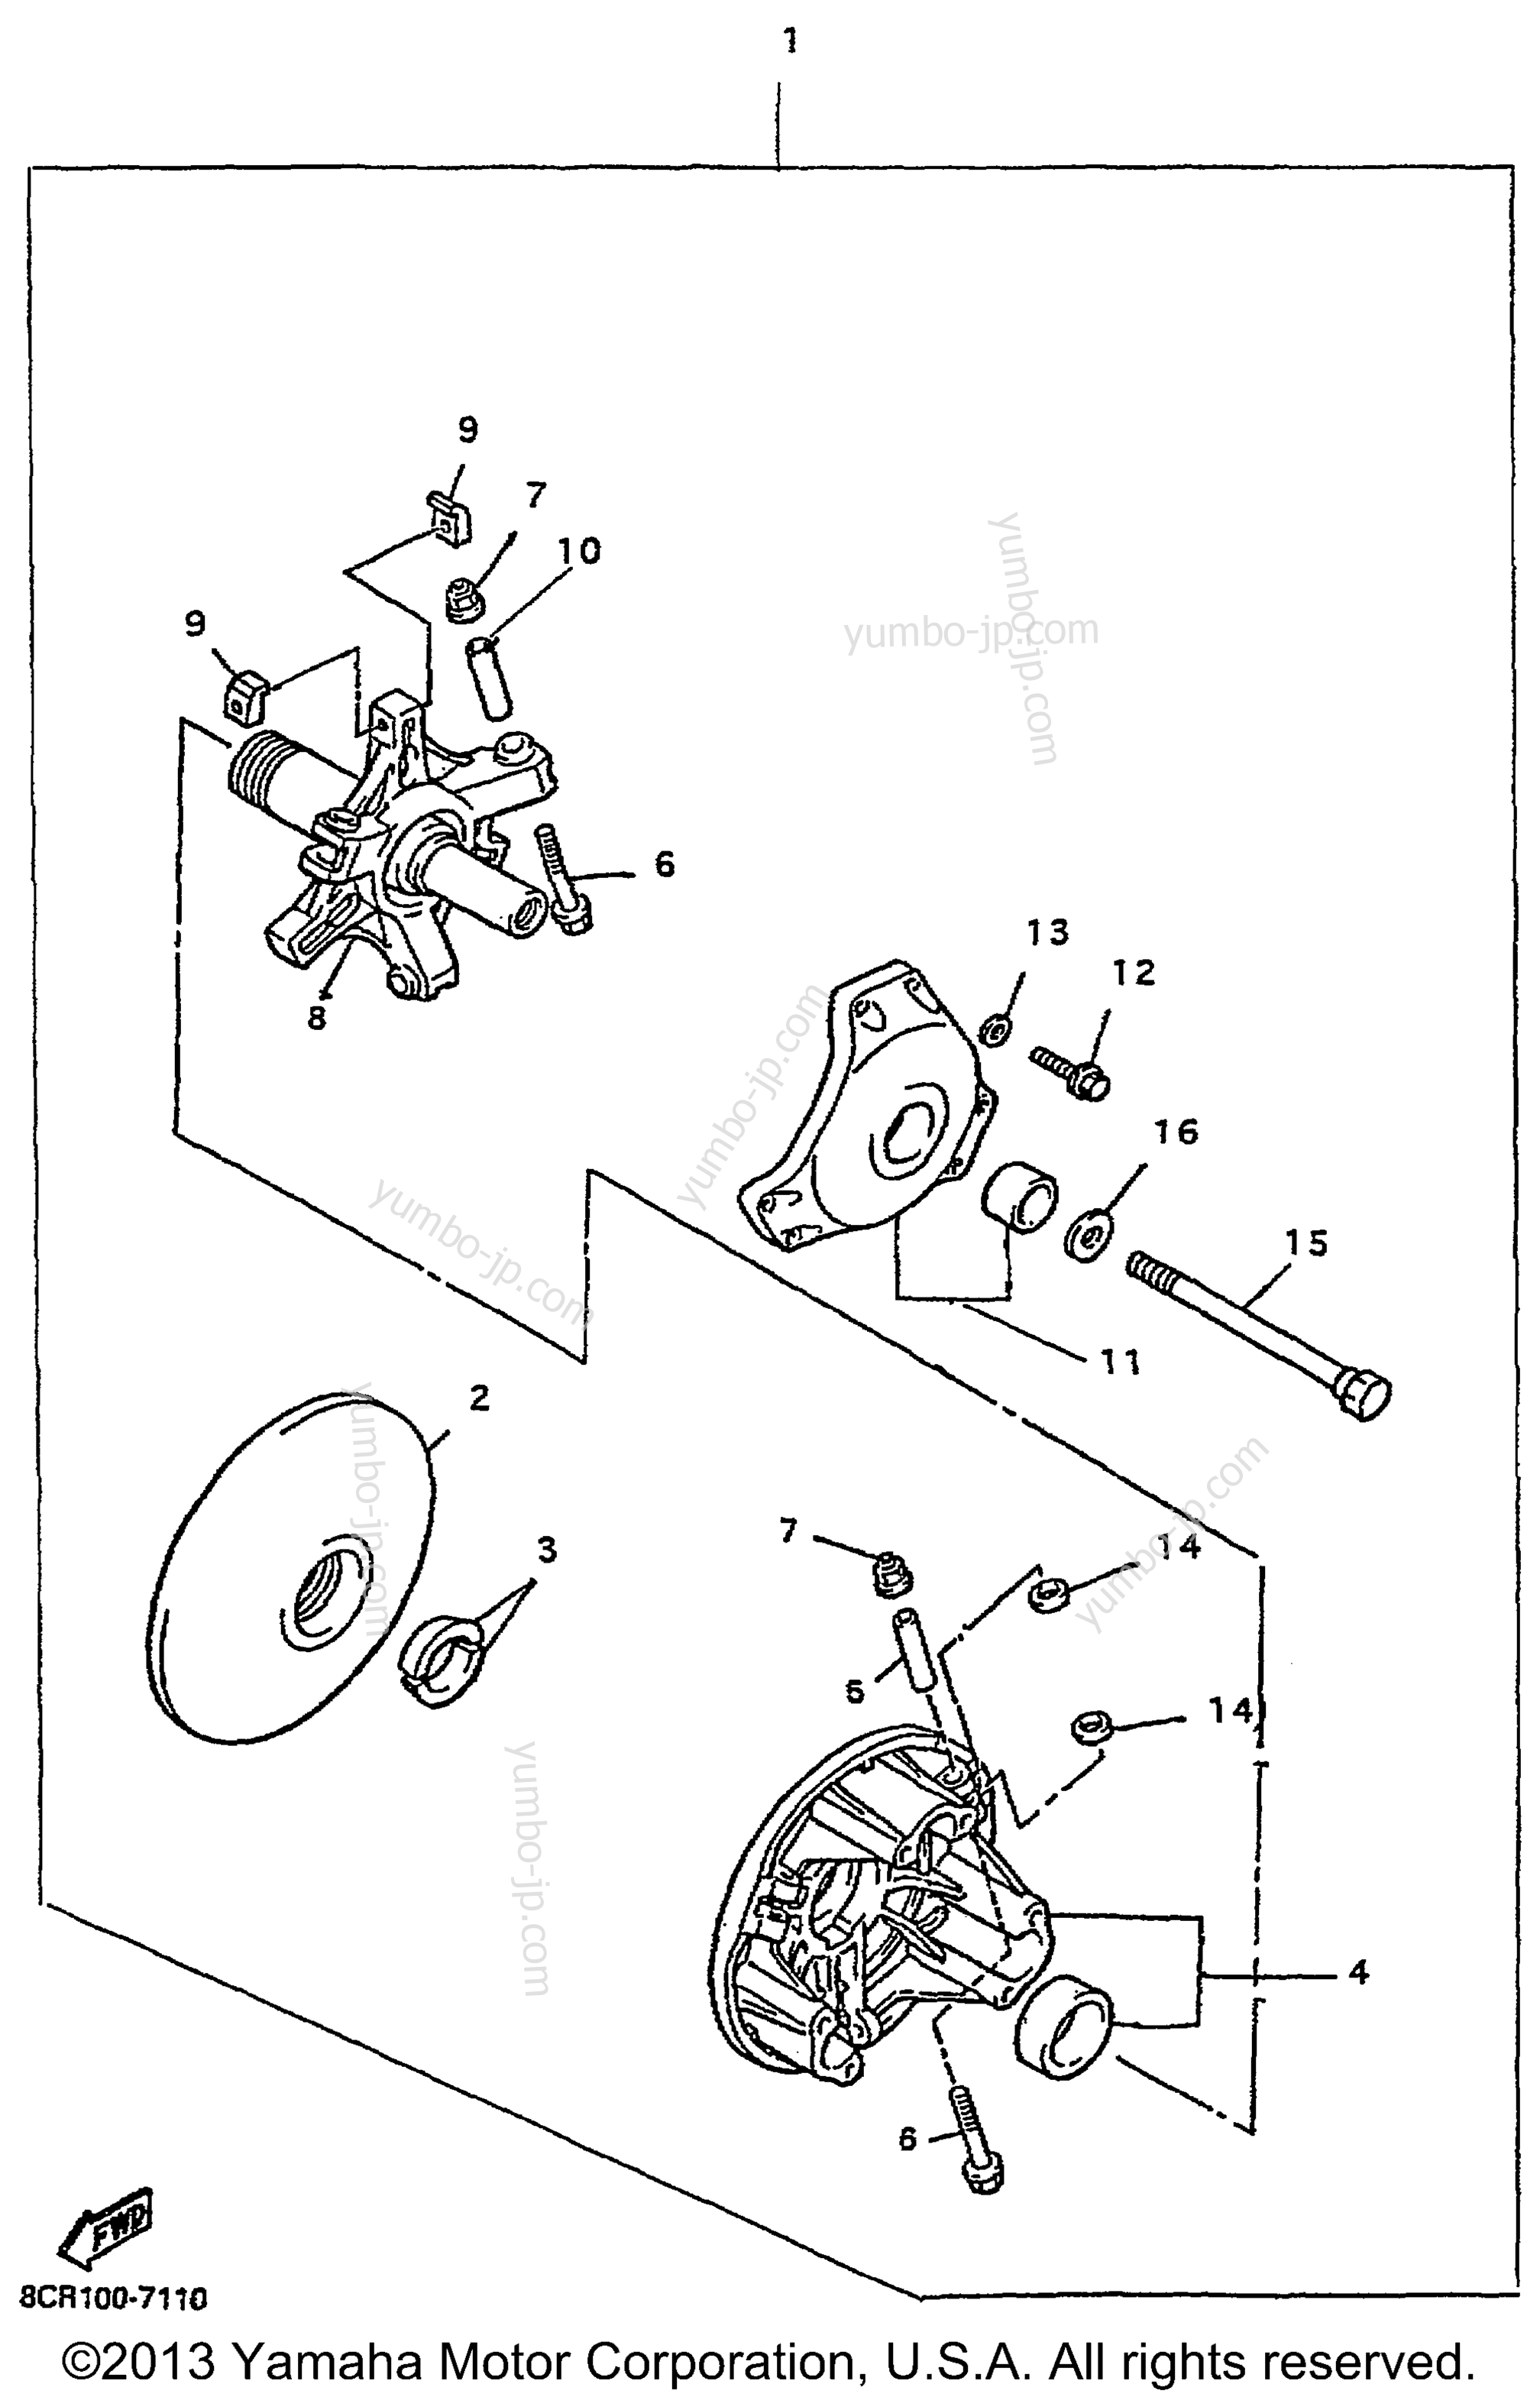 Alternate Clutch Assembly for snowmobiles YAMAHA SRX700S (OHLINS FR SHOCKS) (SRX700SB) 1998 year